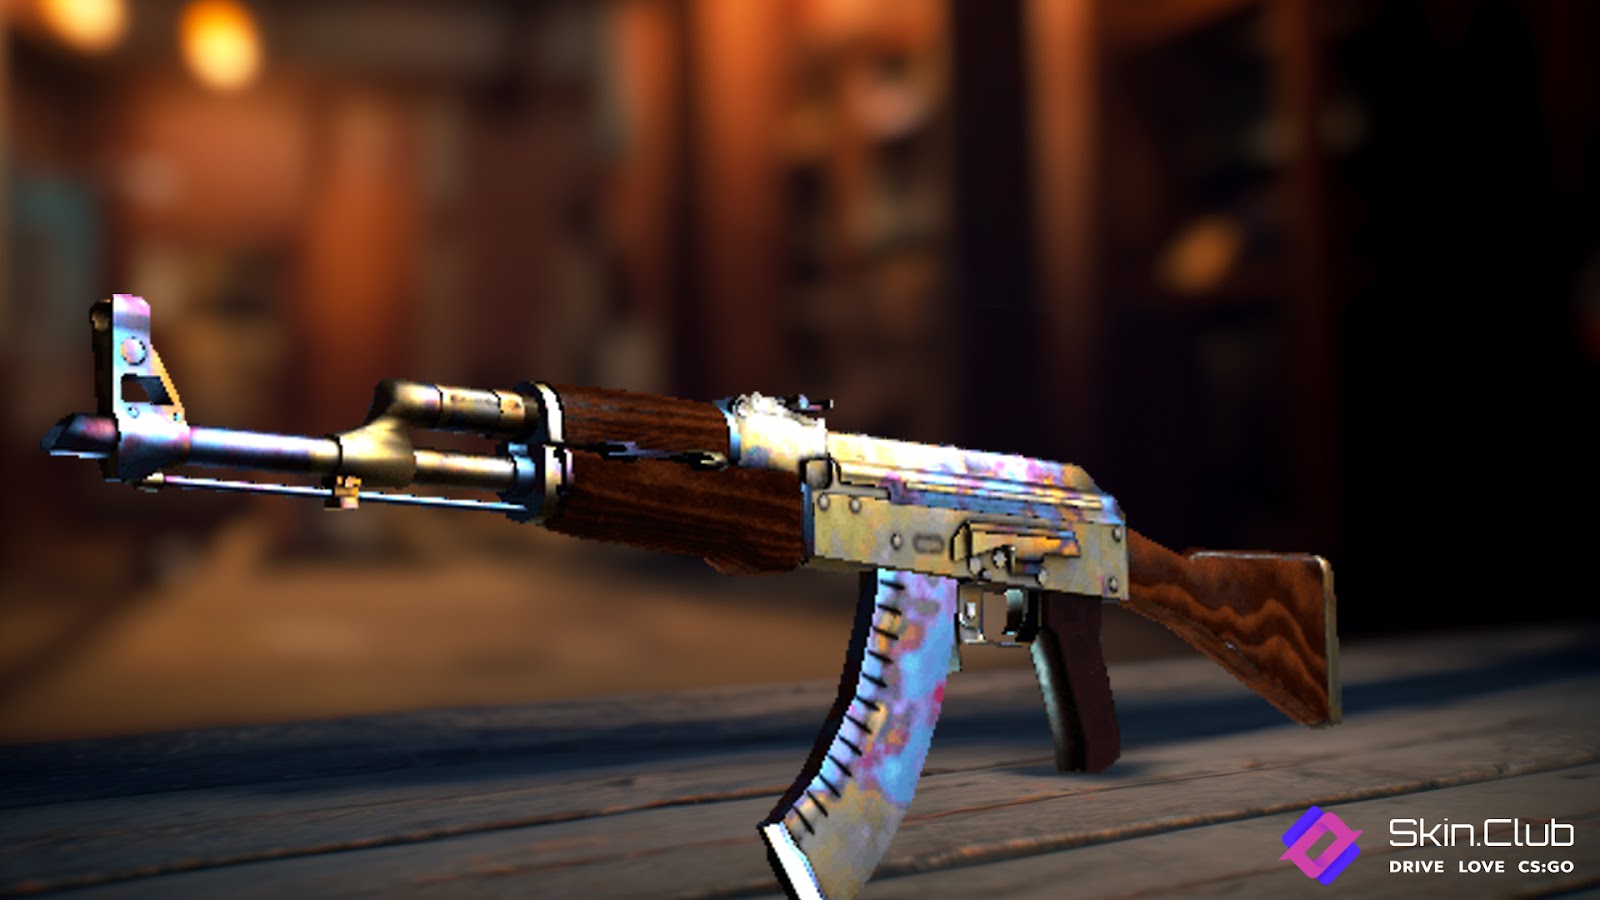 Pris kontra Prestige: De Dyraste AK-47 Skinen i CS:GO